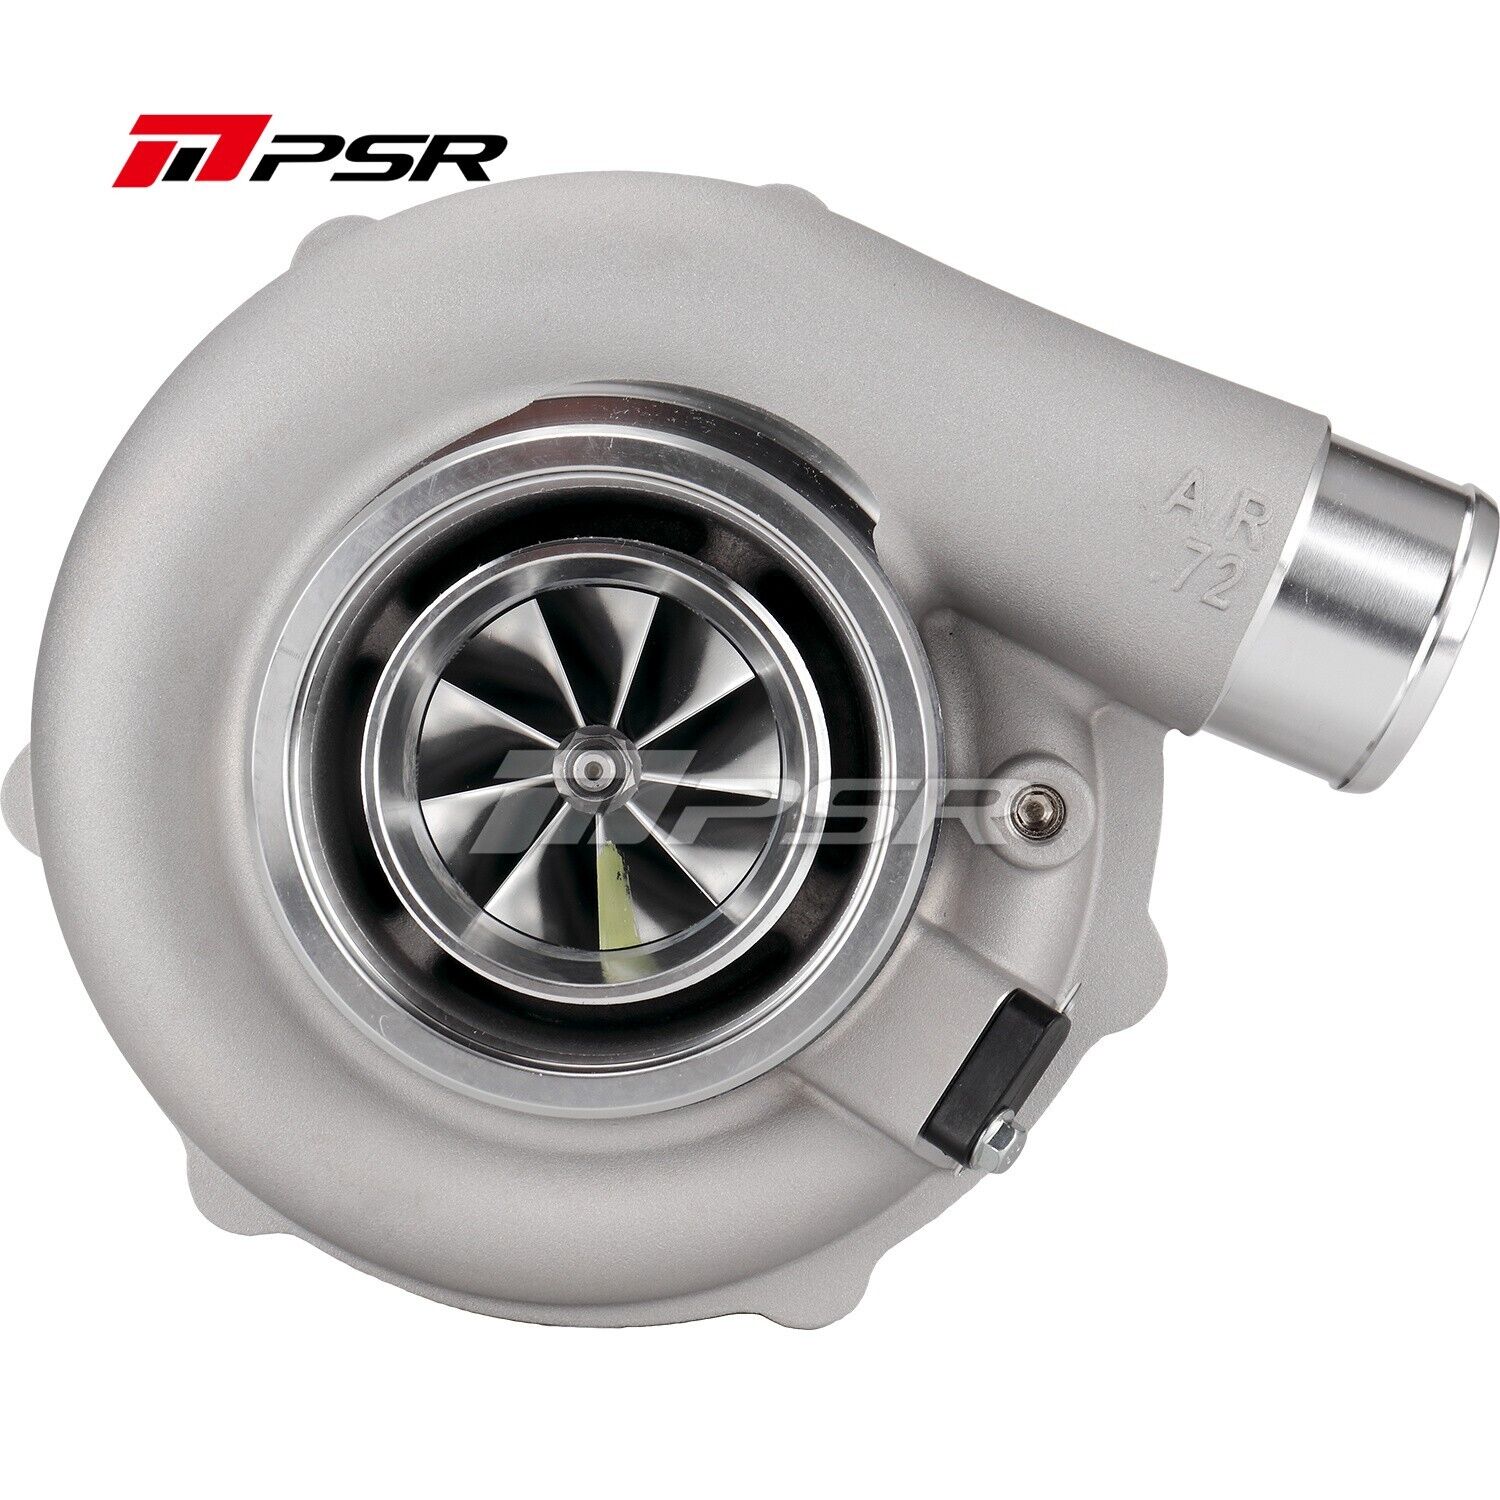 Pulsar 6262G Up To 900HP Dual Ball Bearing Turbo Billet Compressor Dual 0.83A/R